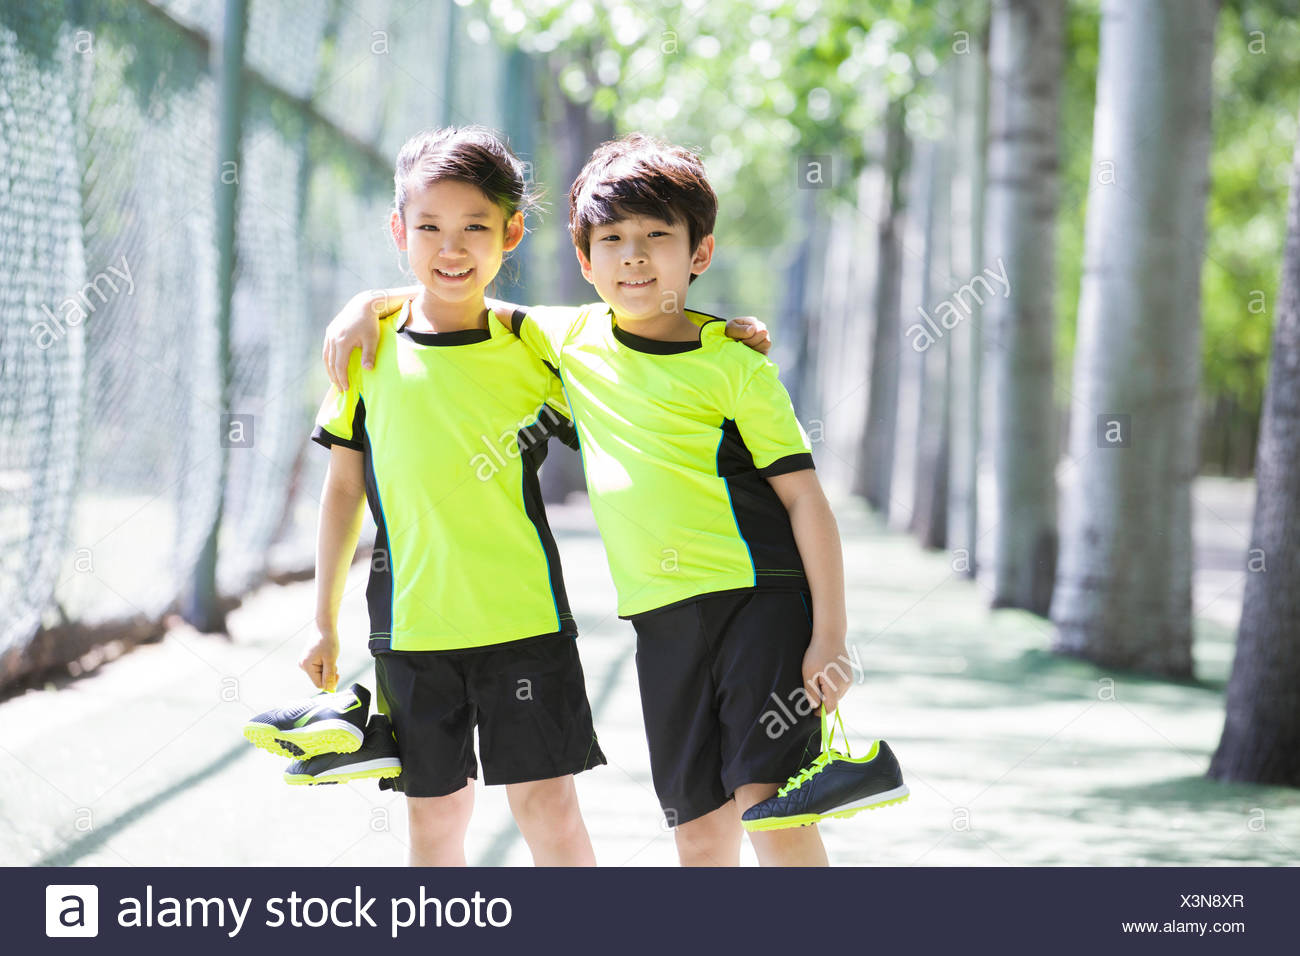 indumentaria deportiva niños